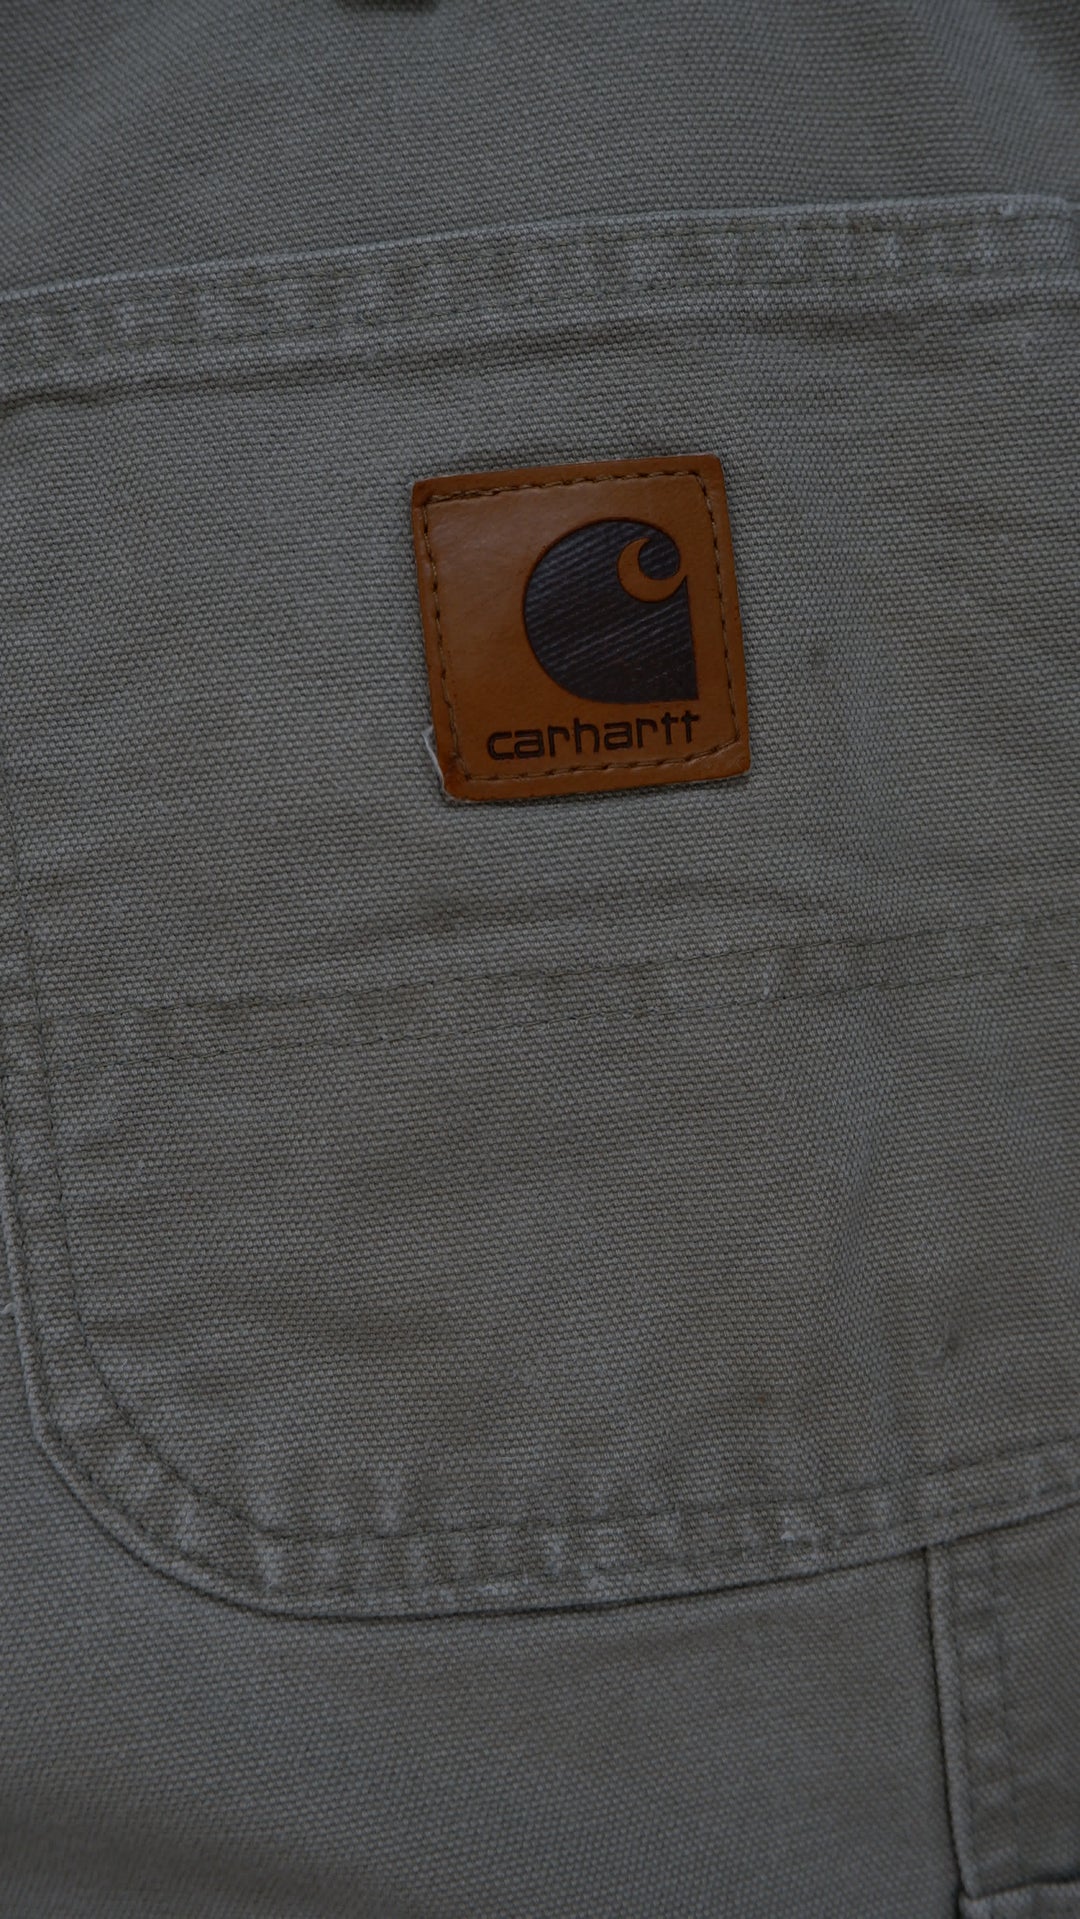 Vintage Carhartt Carpenter Work Wear Pants